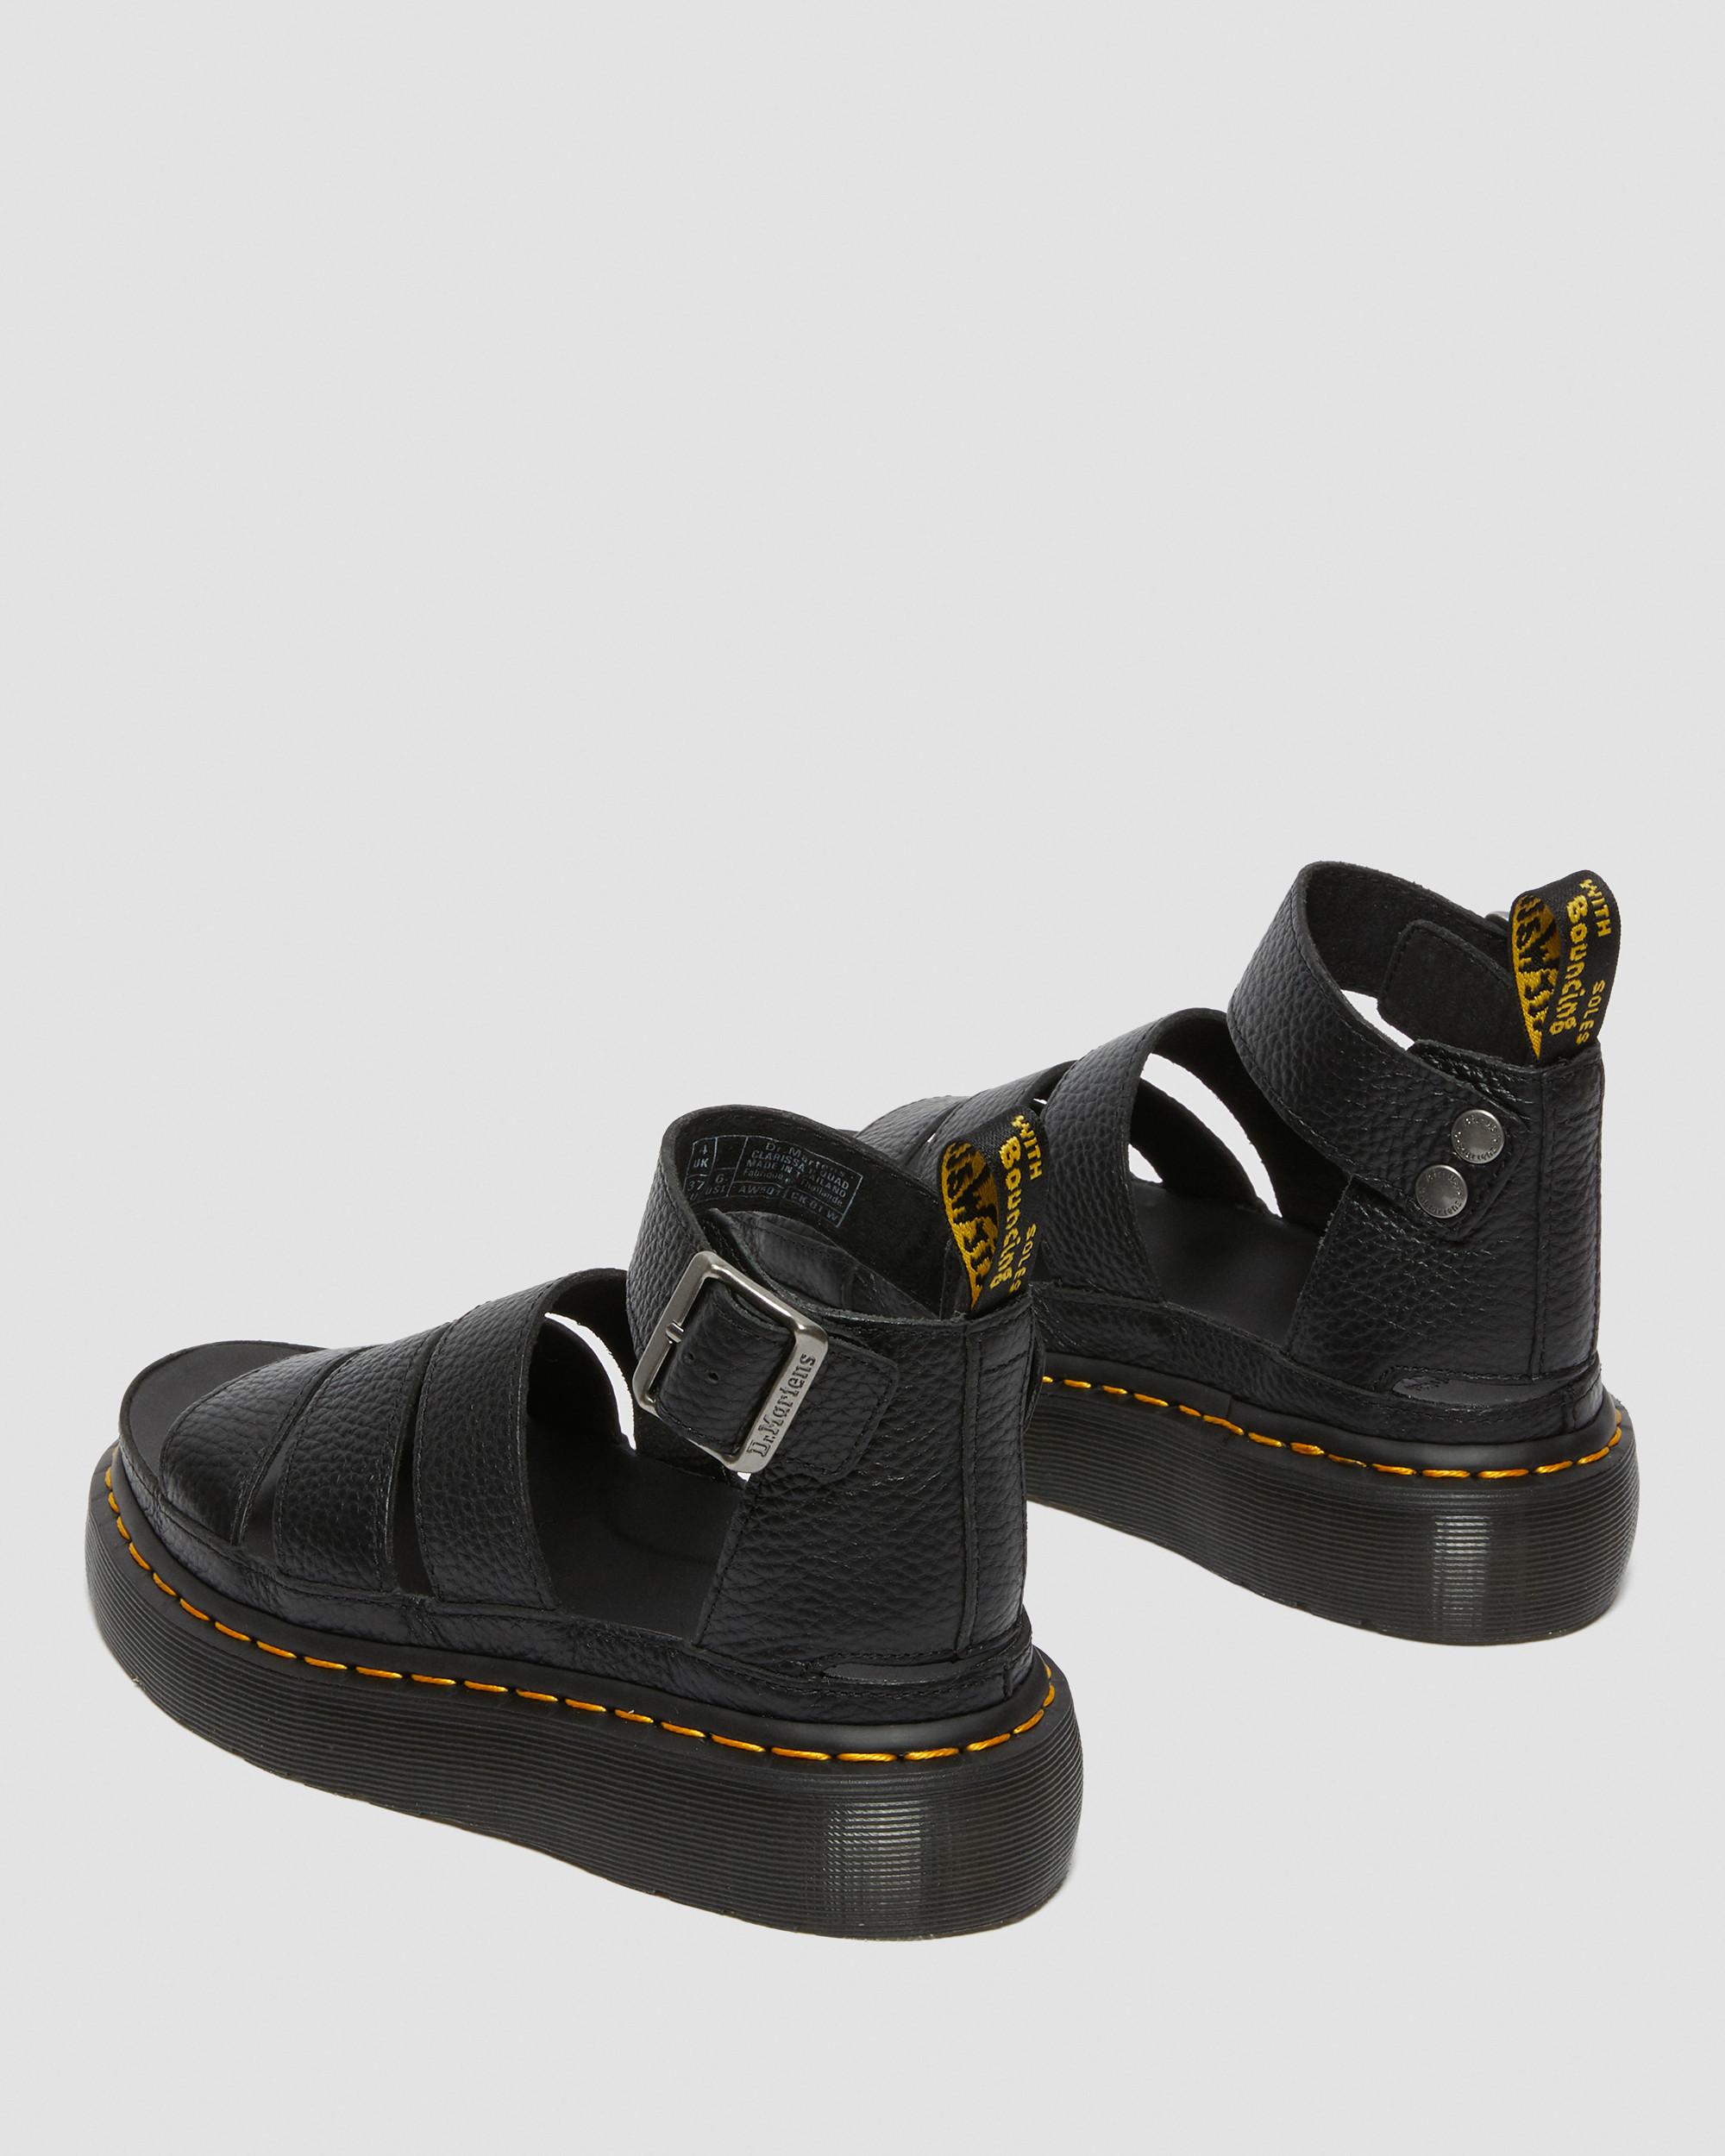 Clarissa II Quad Milled Nappa Leather Platform Sandals in Black